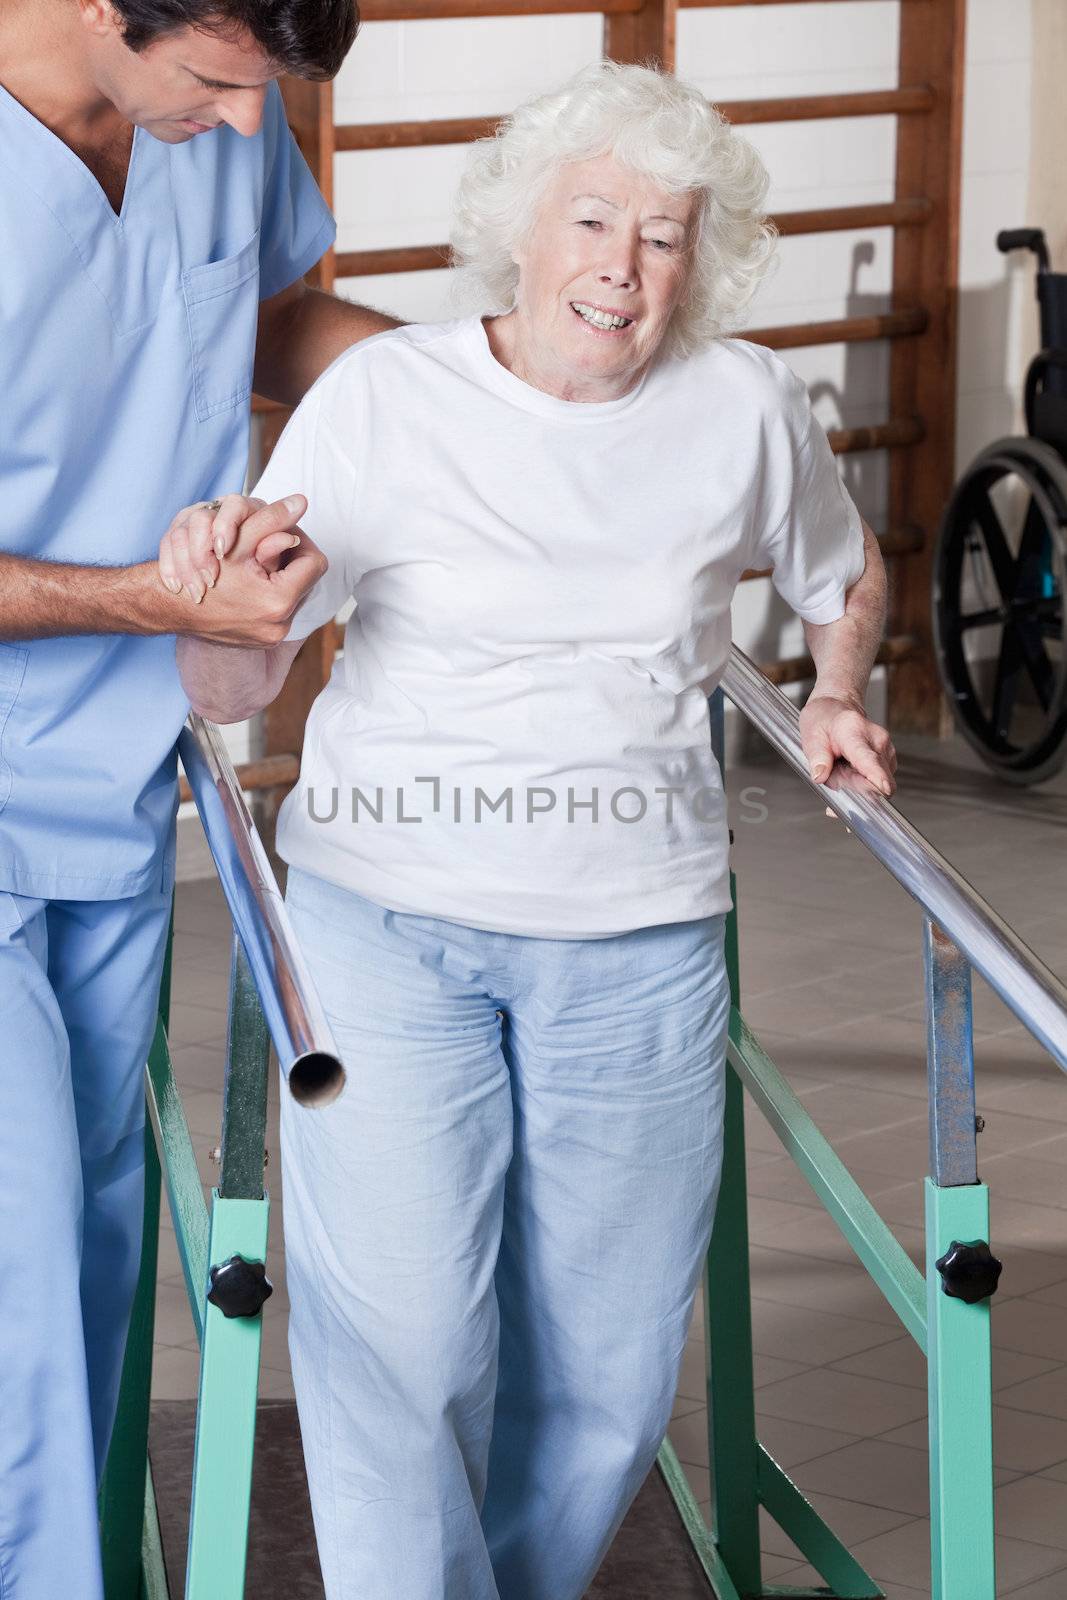 A doctor assisting a senior citizen .